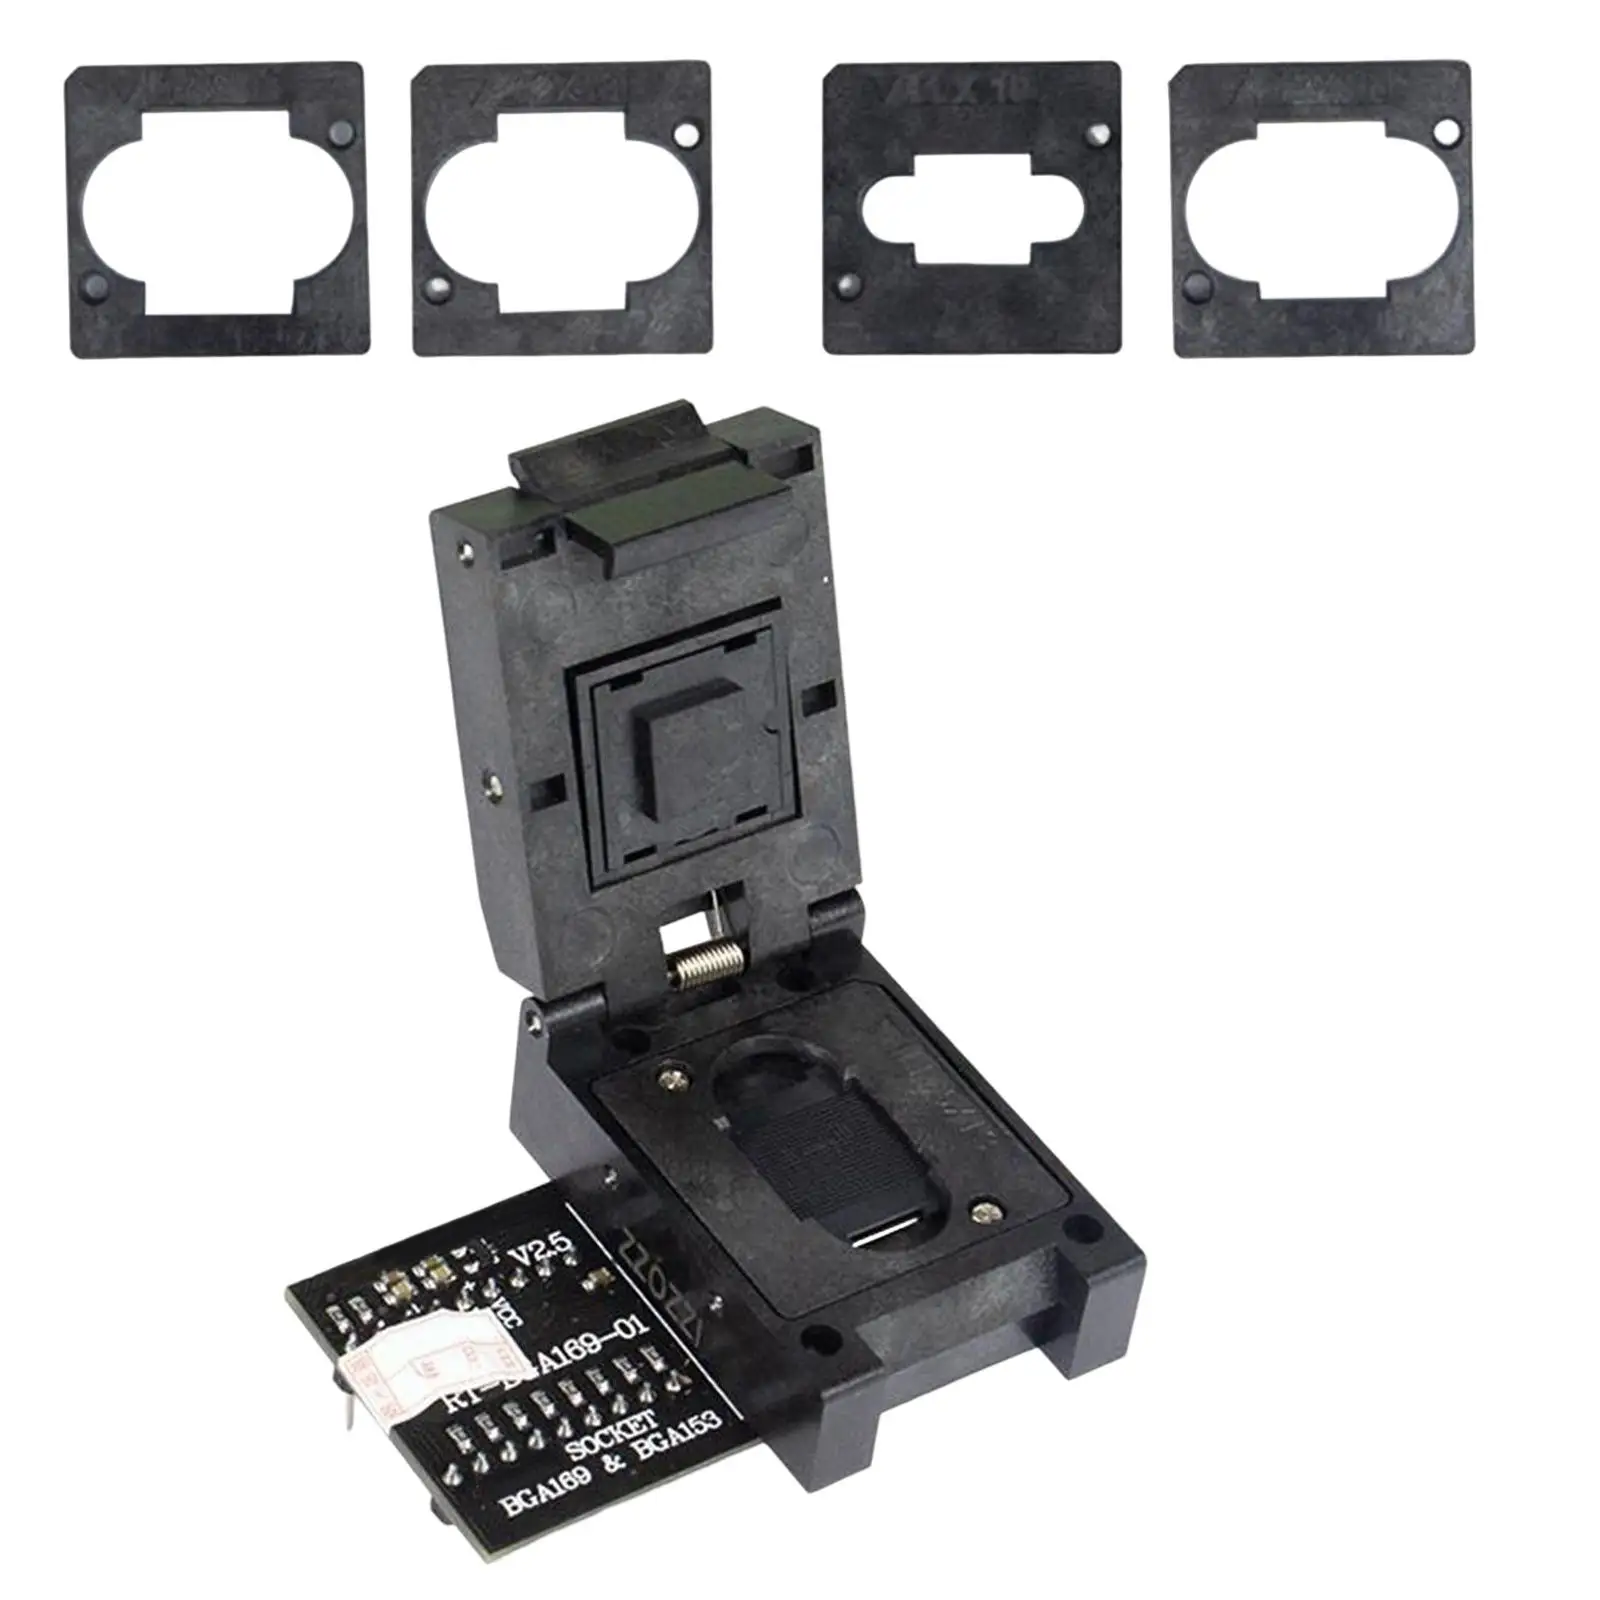 1.8V Bga153 Bga169 Emmc Adapter Multifunctional Easy to Control High Performance Parts